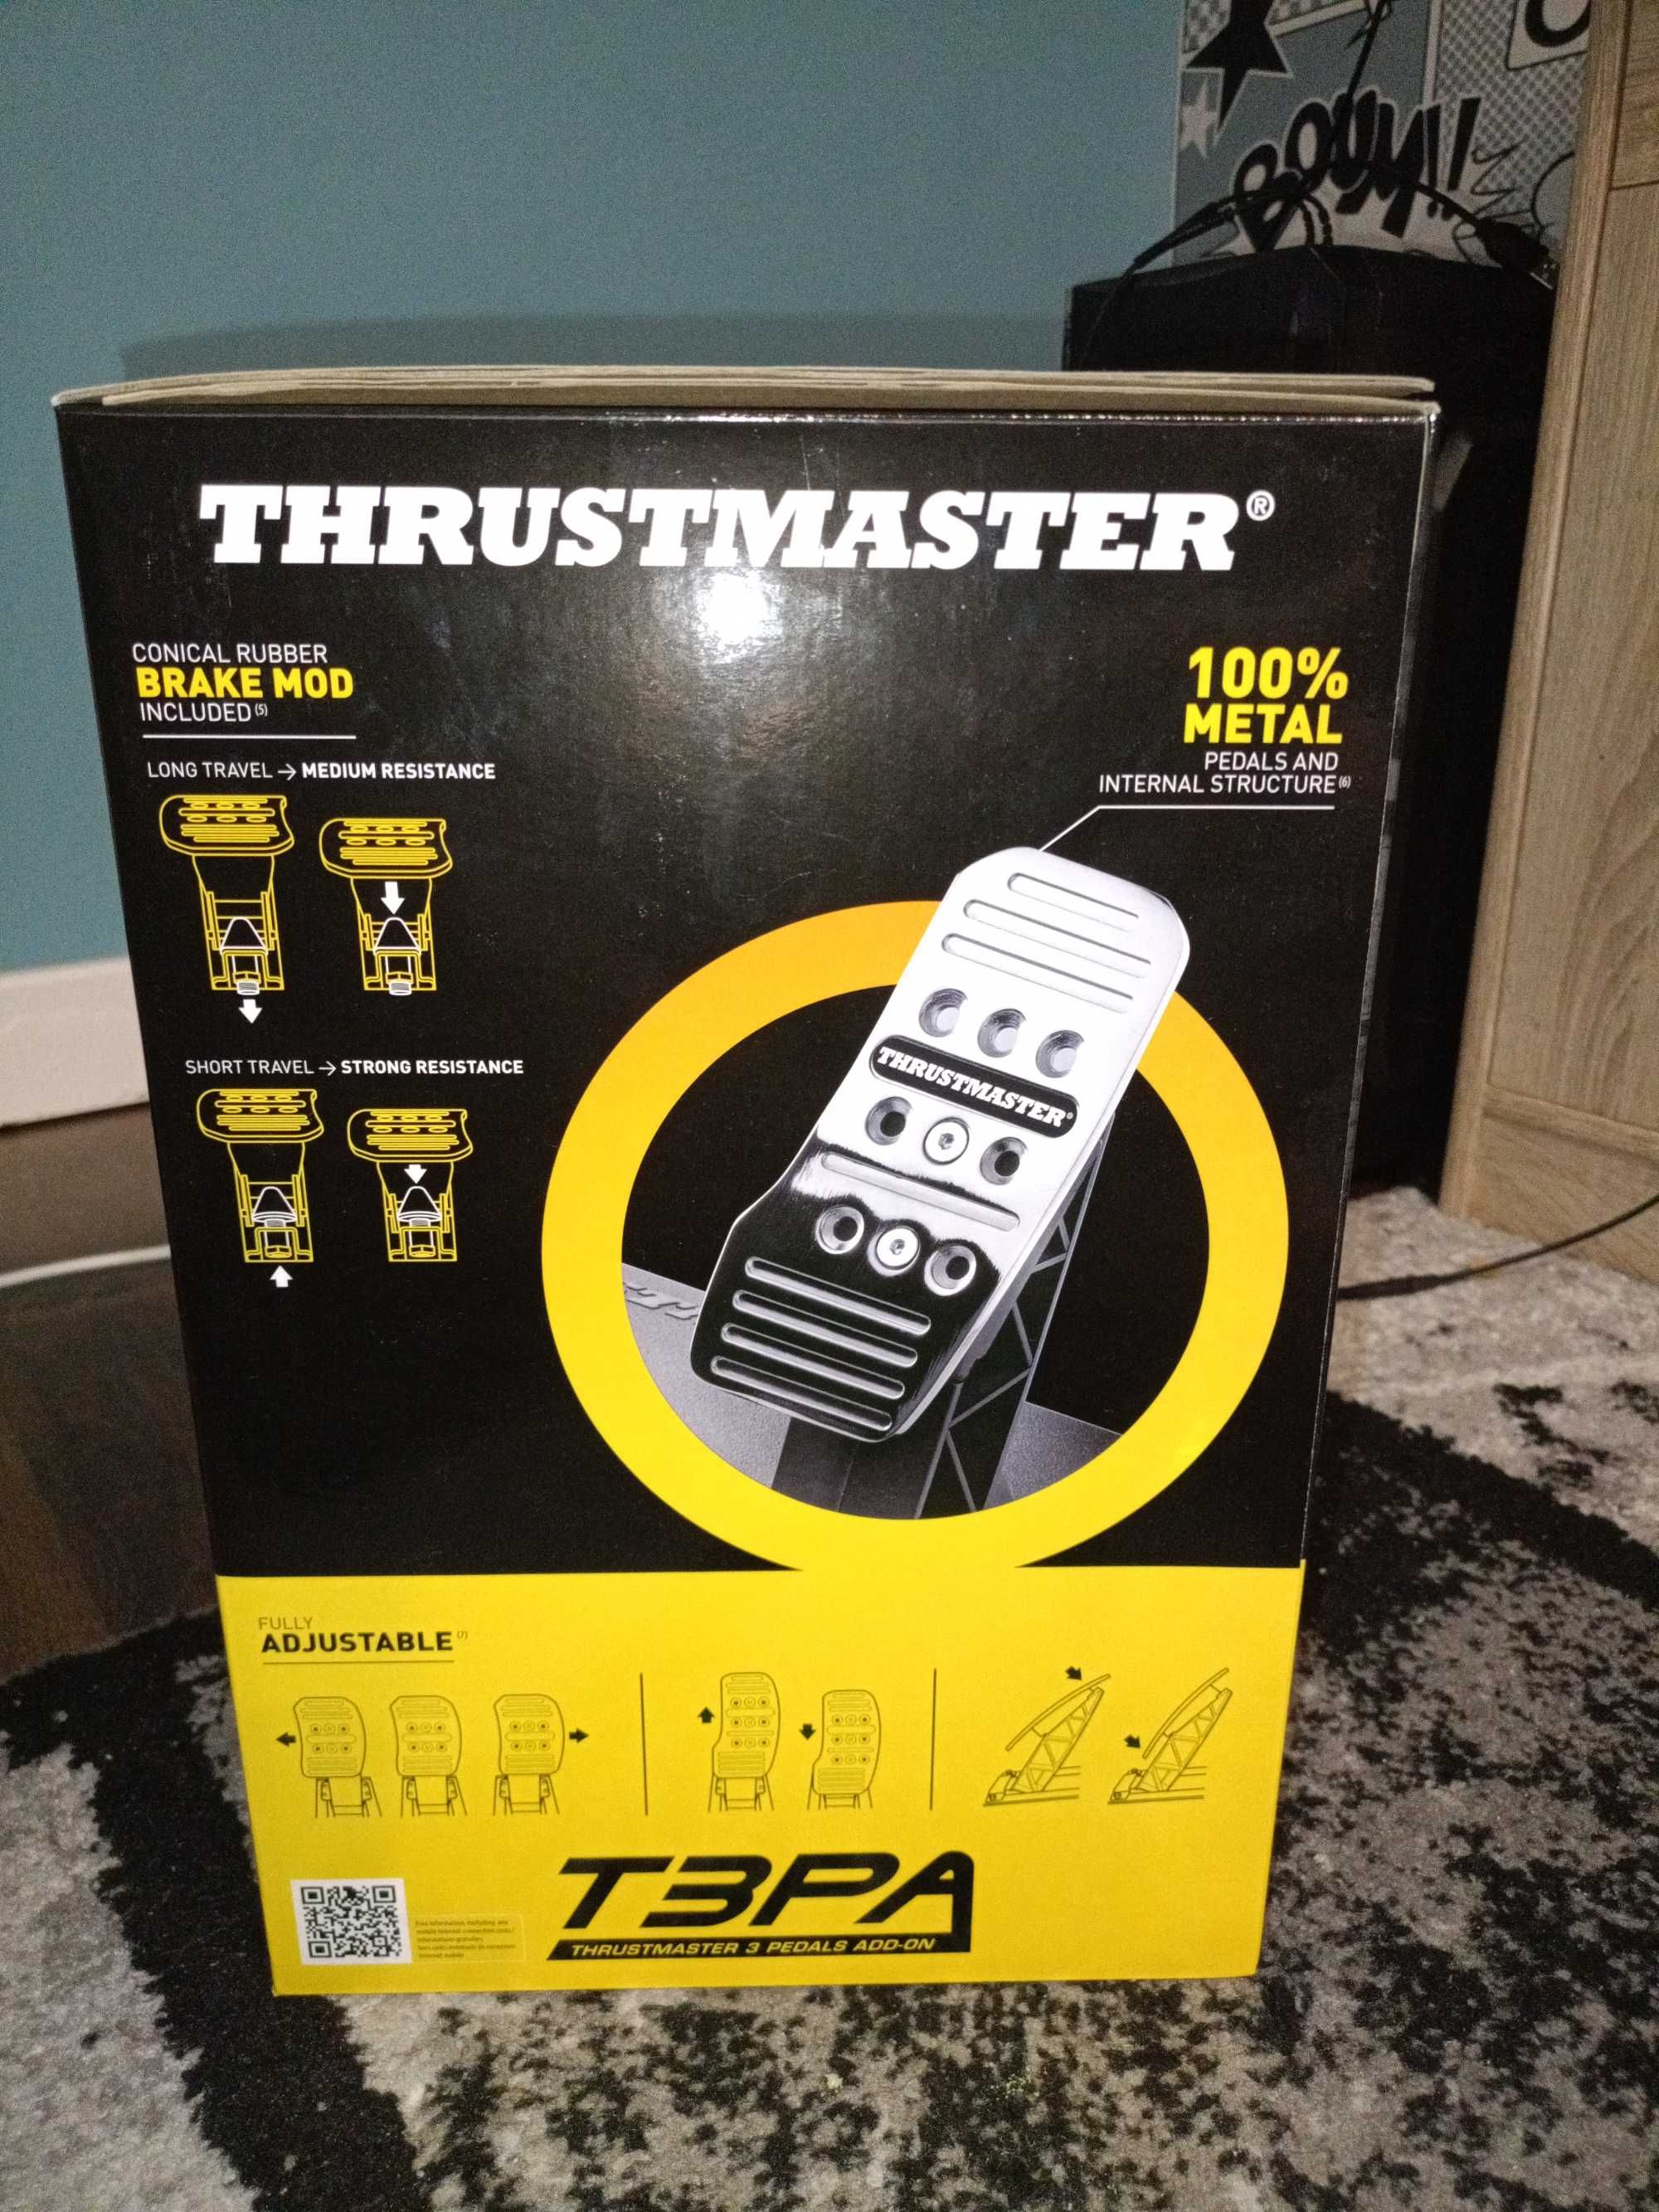 Thrustmaster t3pa pedały + modyfikacja